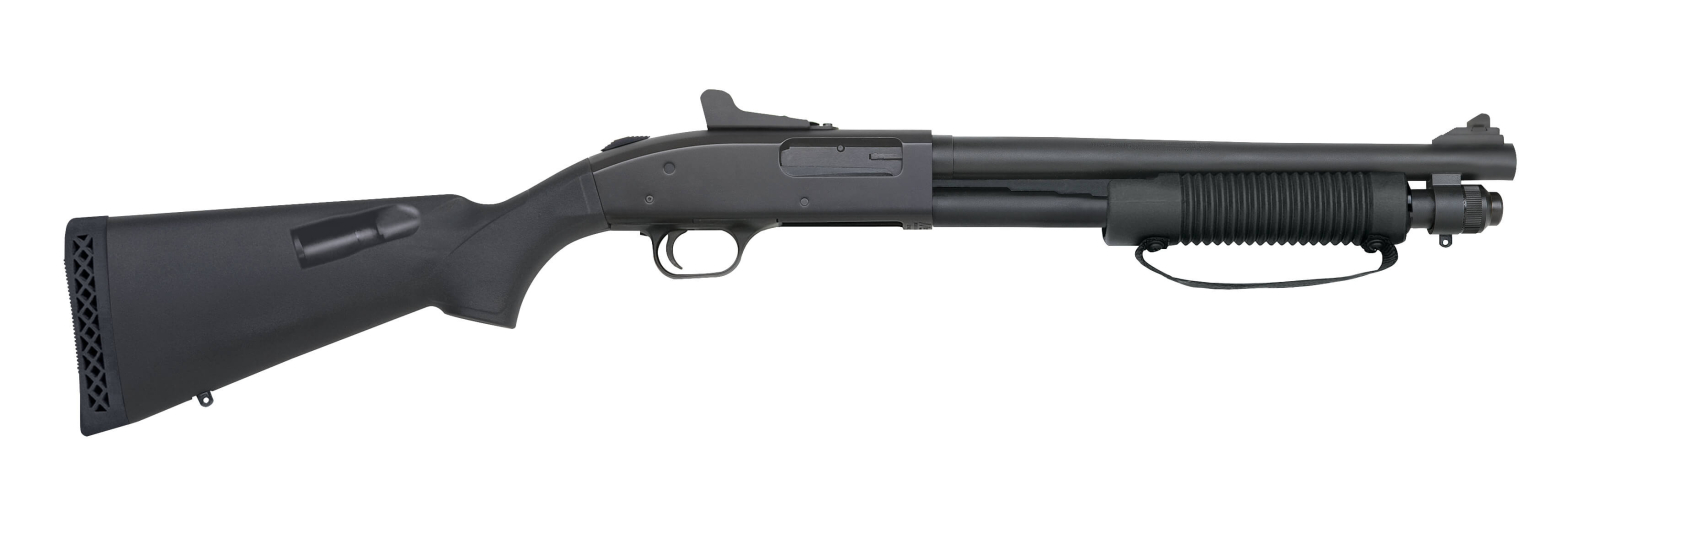 Main Firearm Image